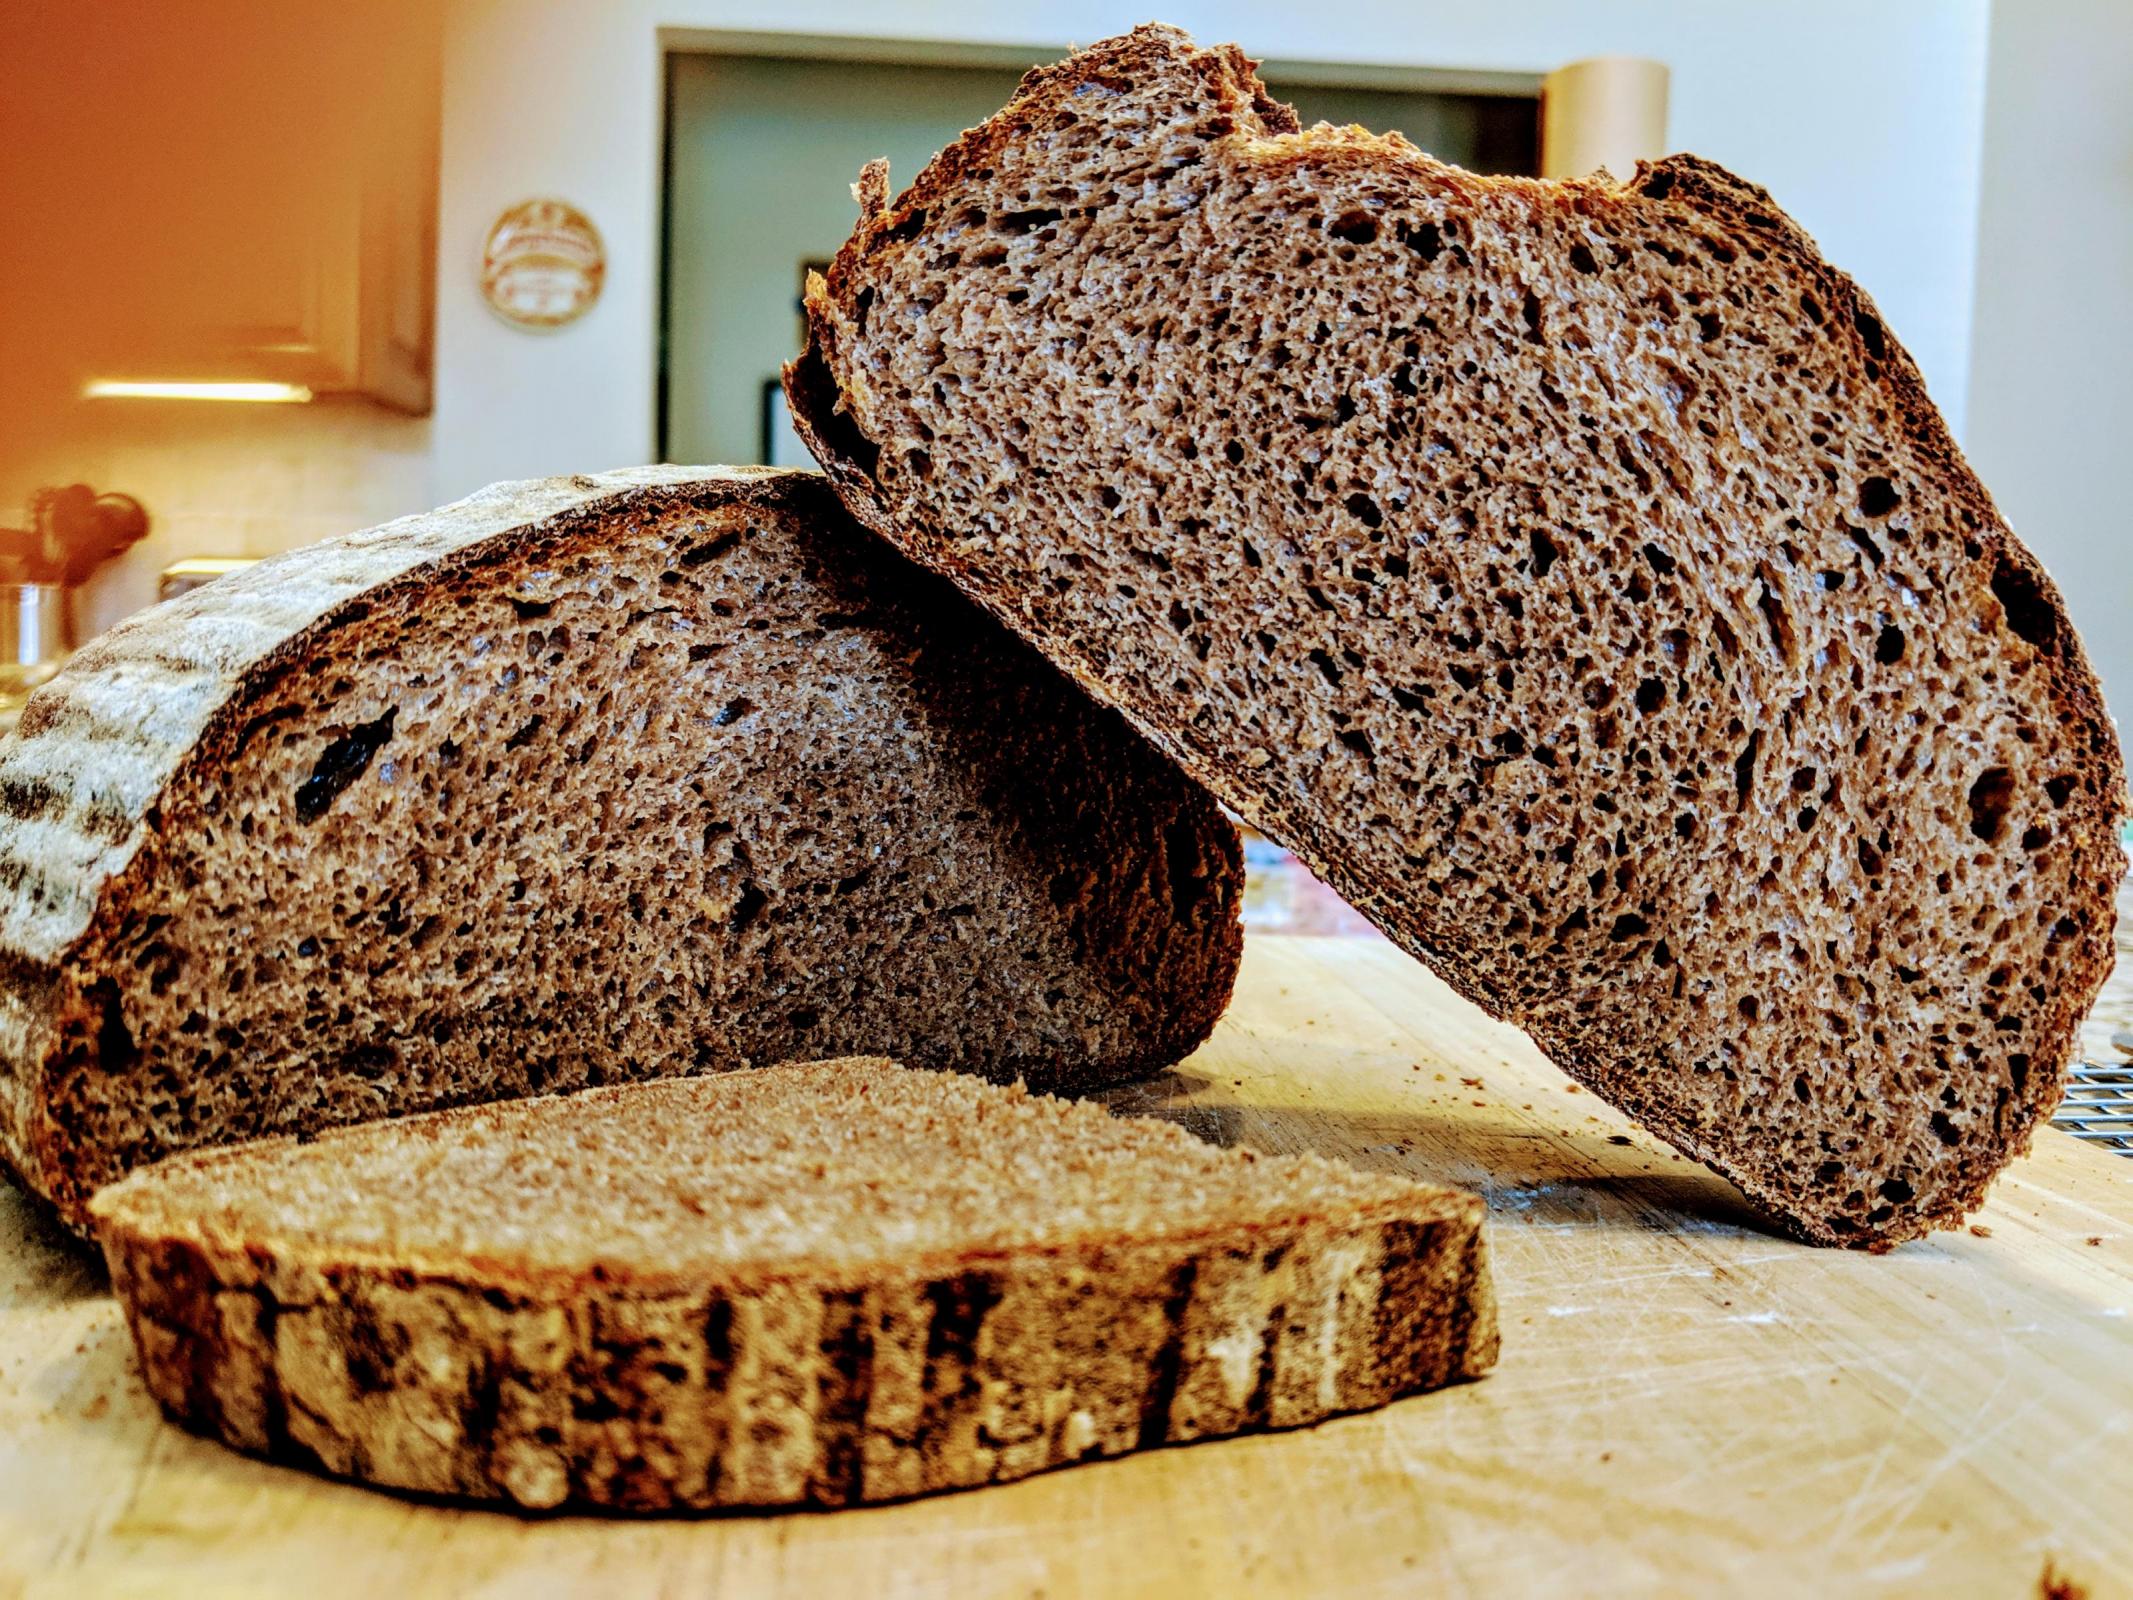 Crumb shot, freshly milled whole wheat loaf